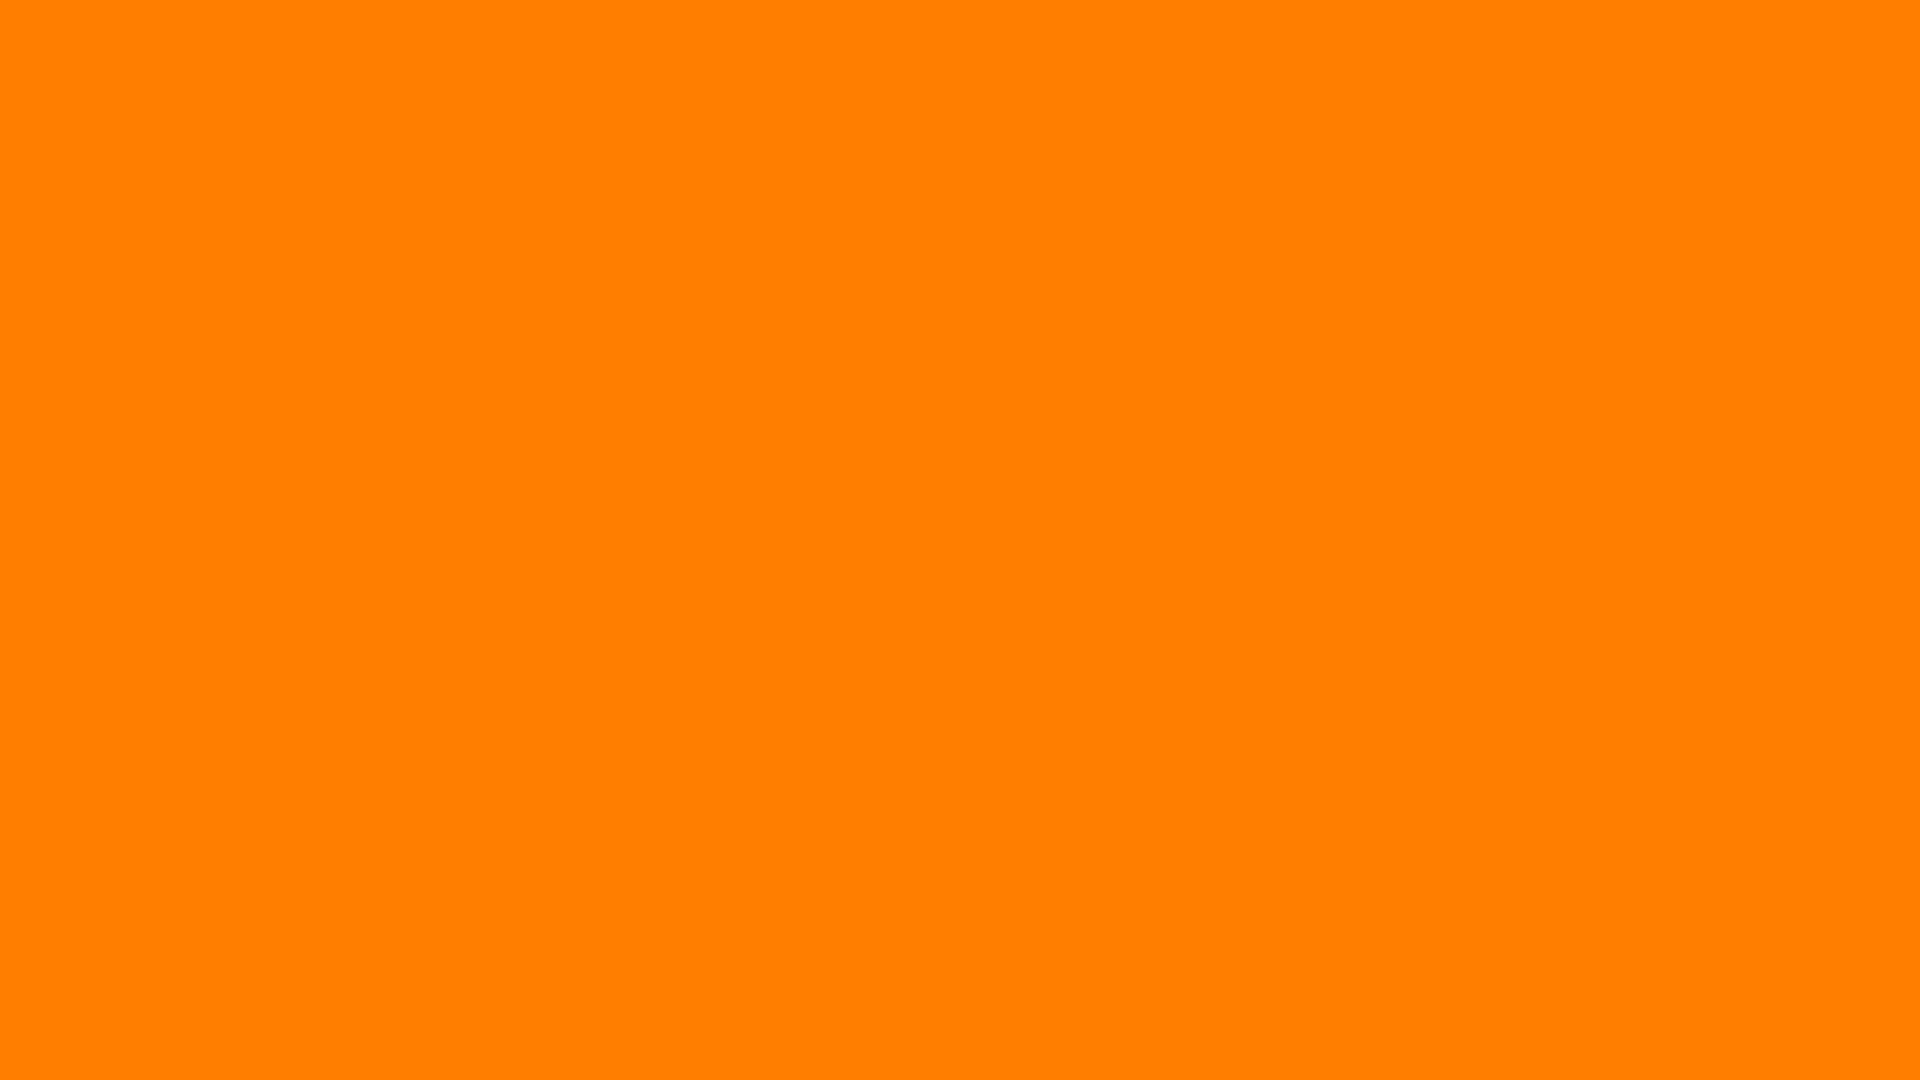 Orange Background Images (51+ pictures)